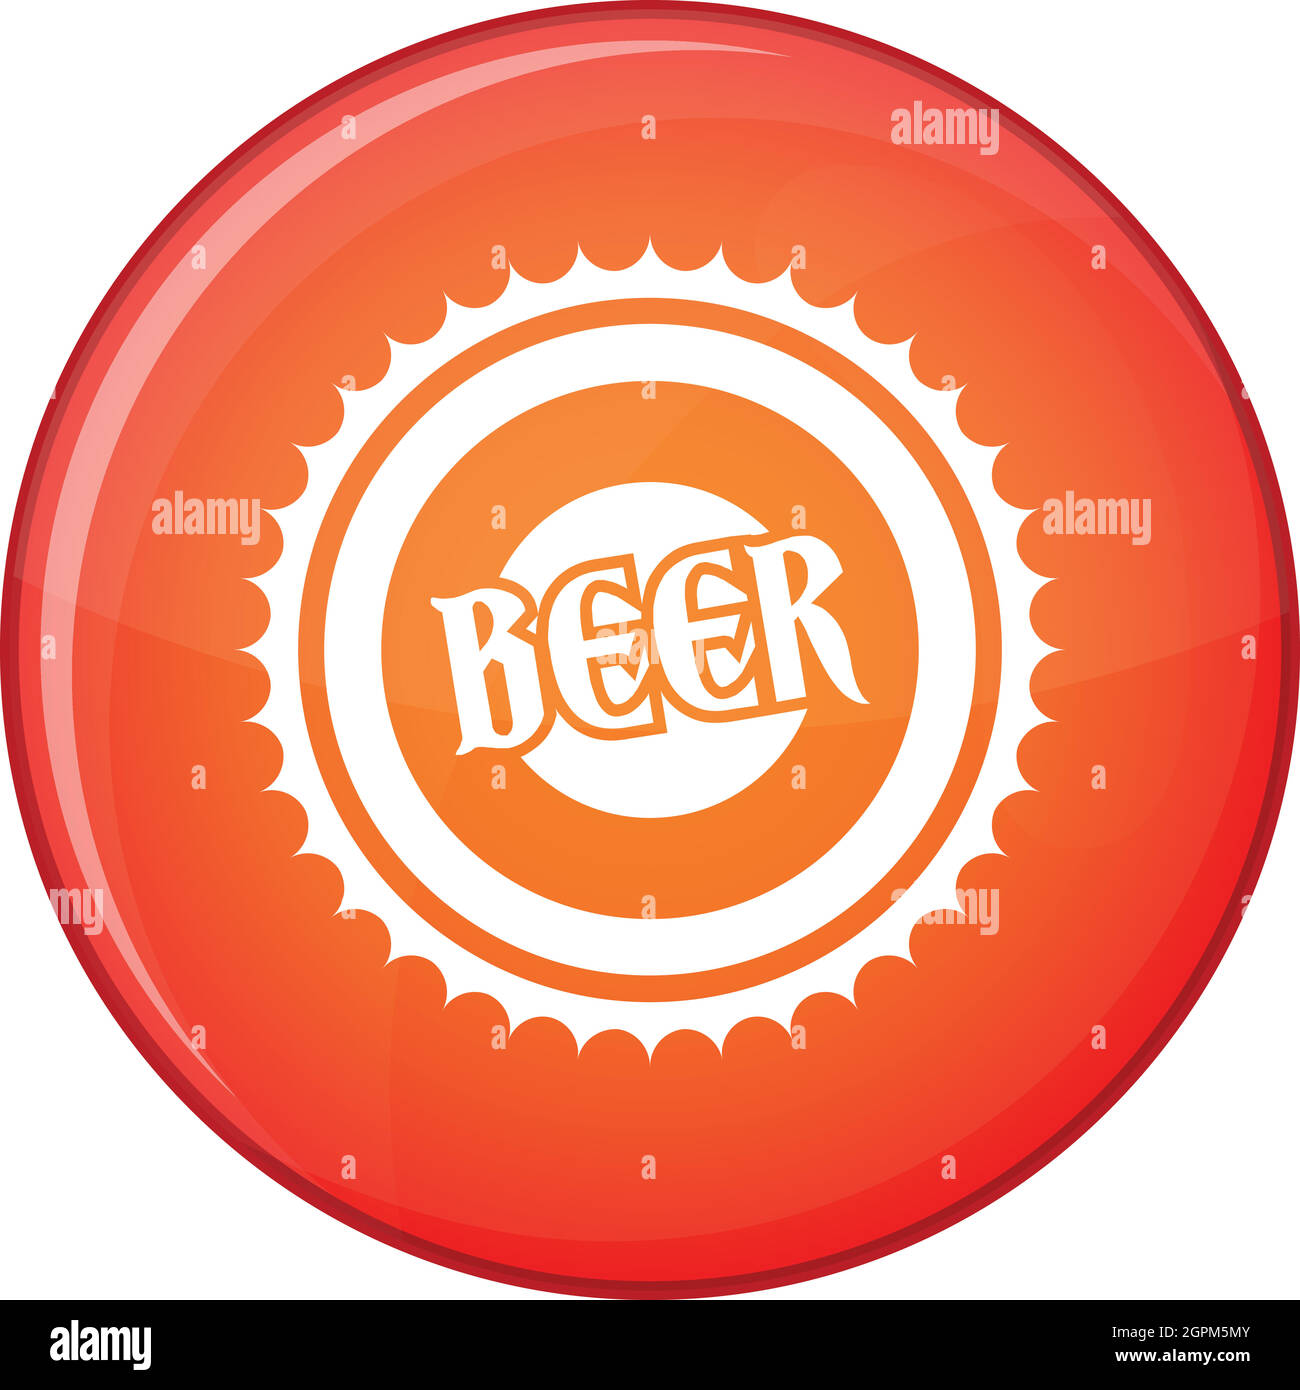 Beer bottle cap icon, flat style Stock Vector